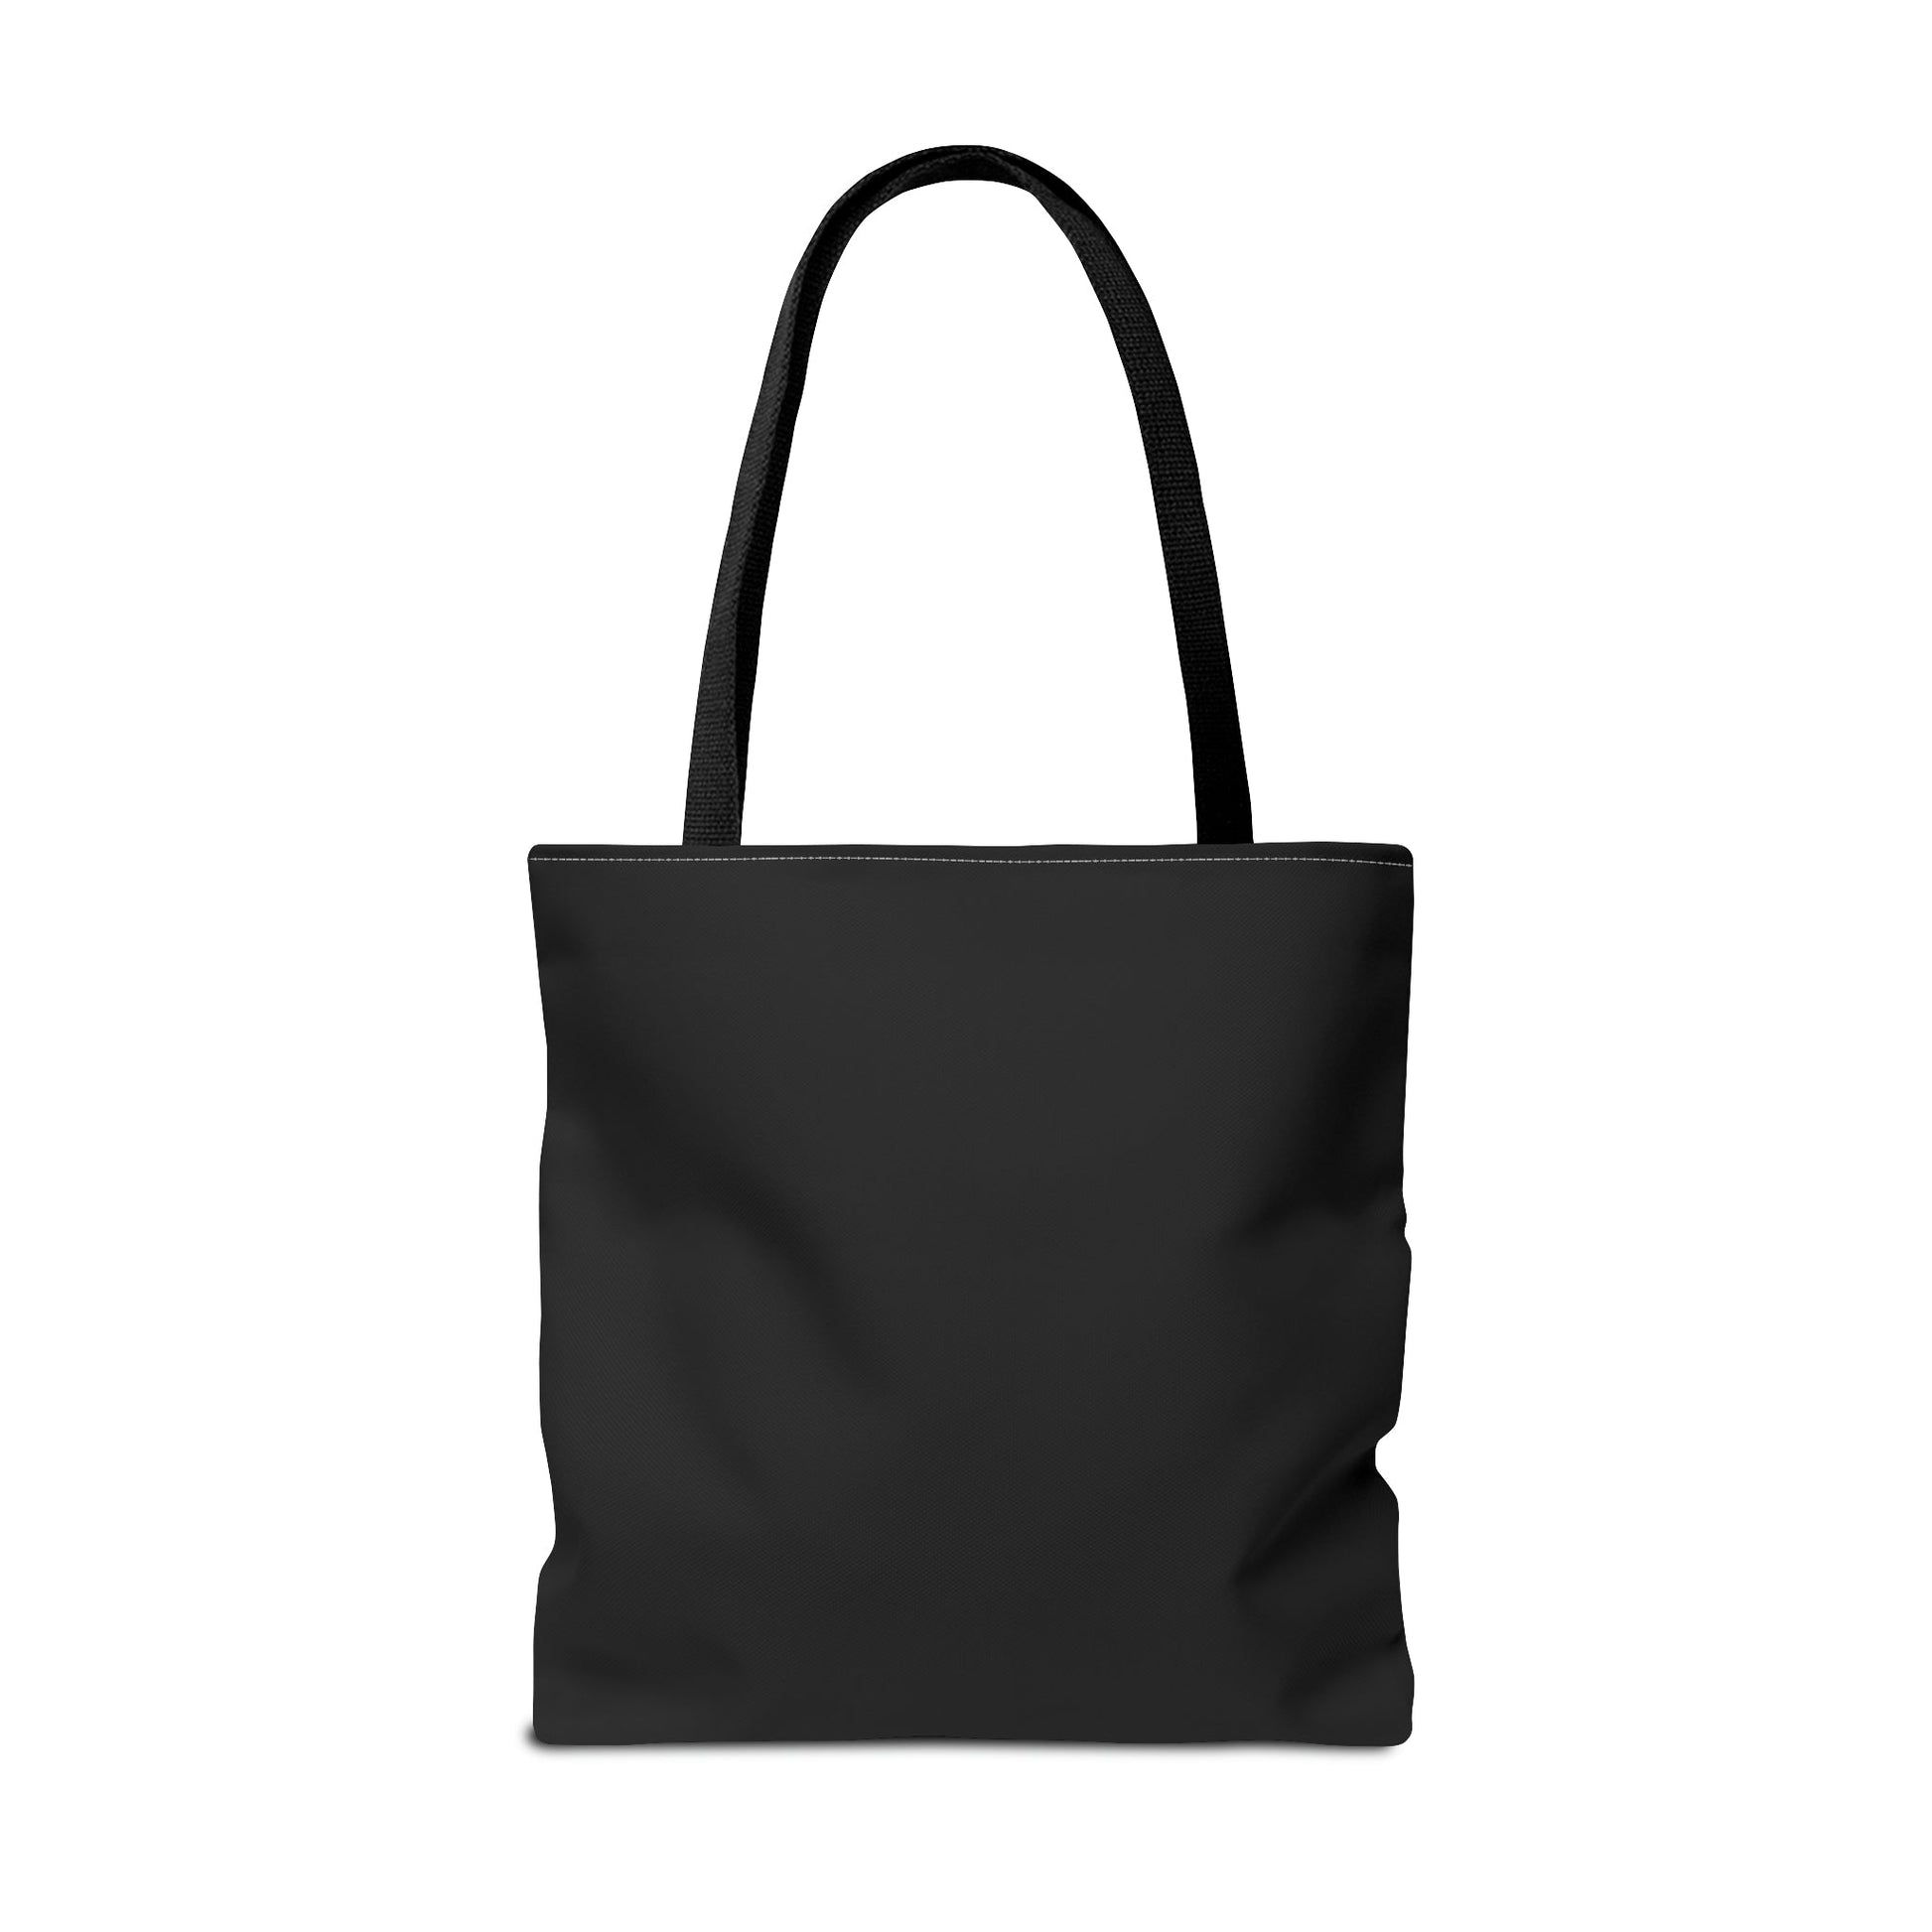 Orange Cat Energy Tote Bag in Black | 18" x 18"